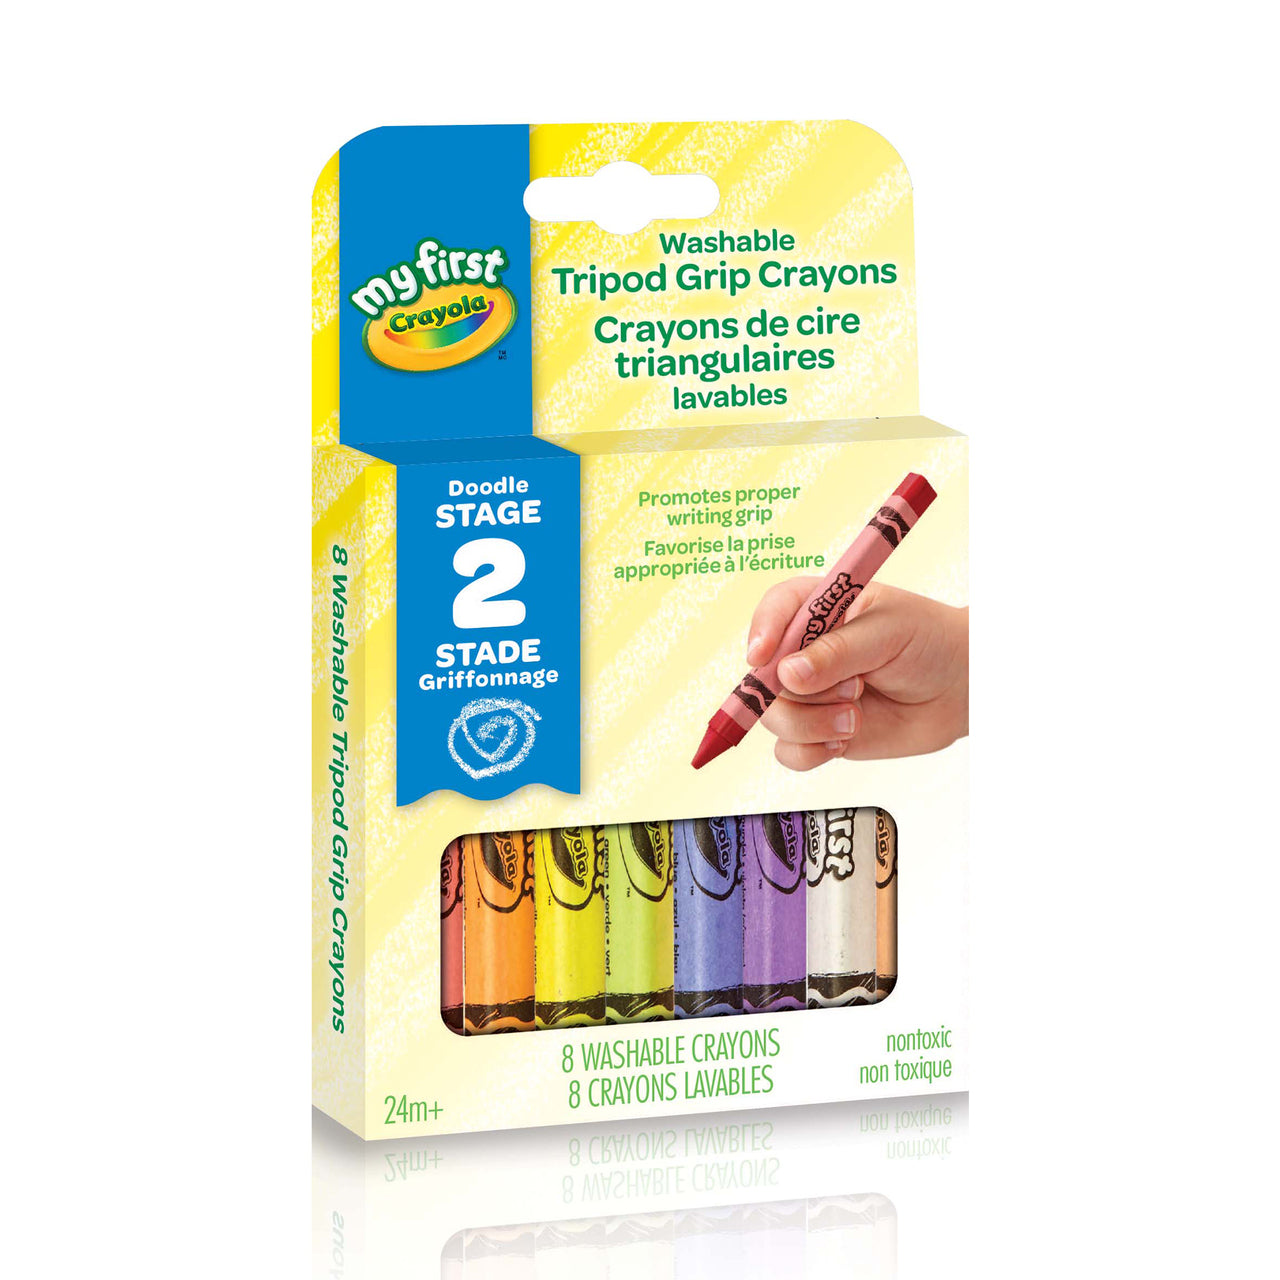 Crayola My First Crayola Washable Tripod Grip Crayons